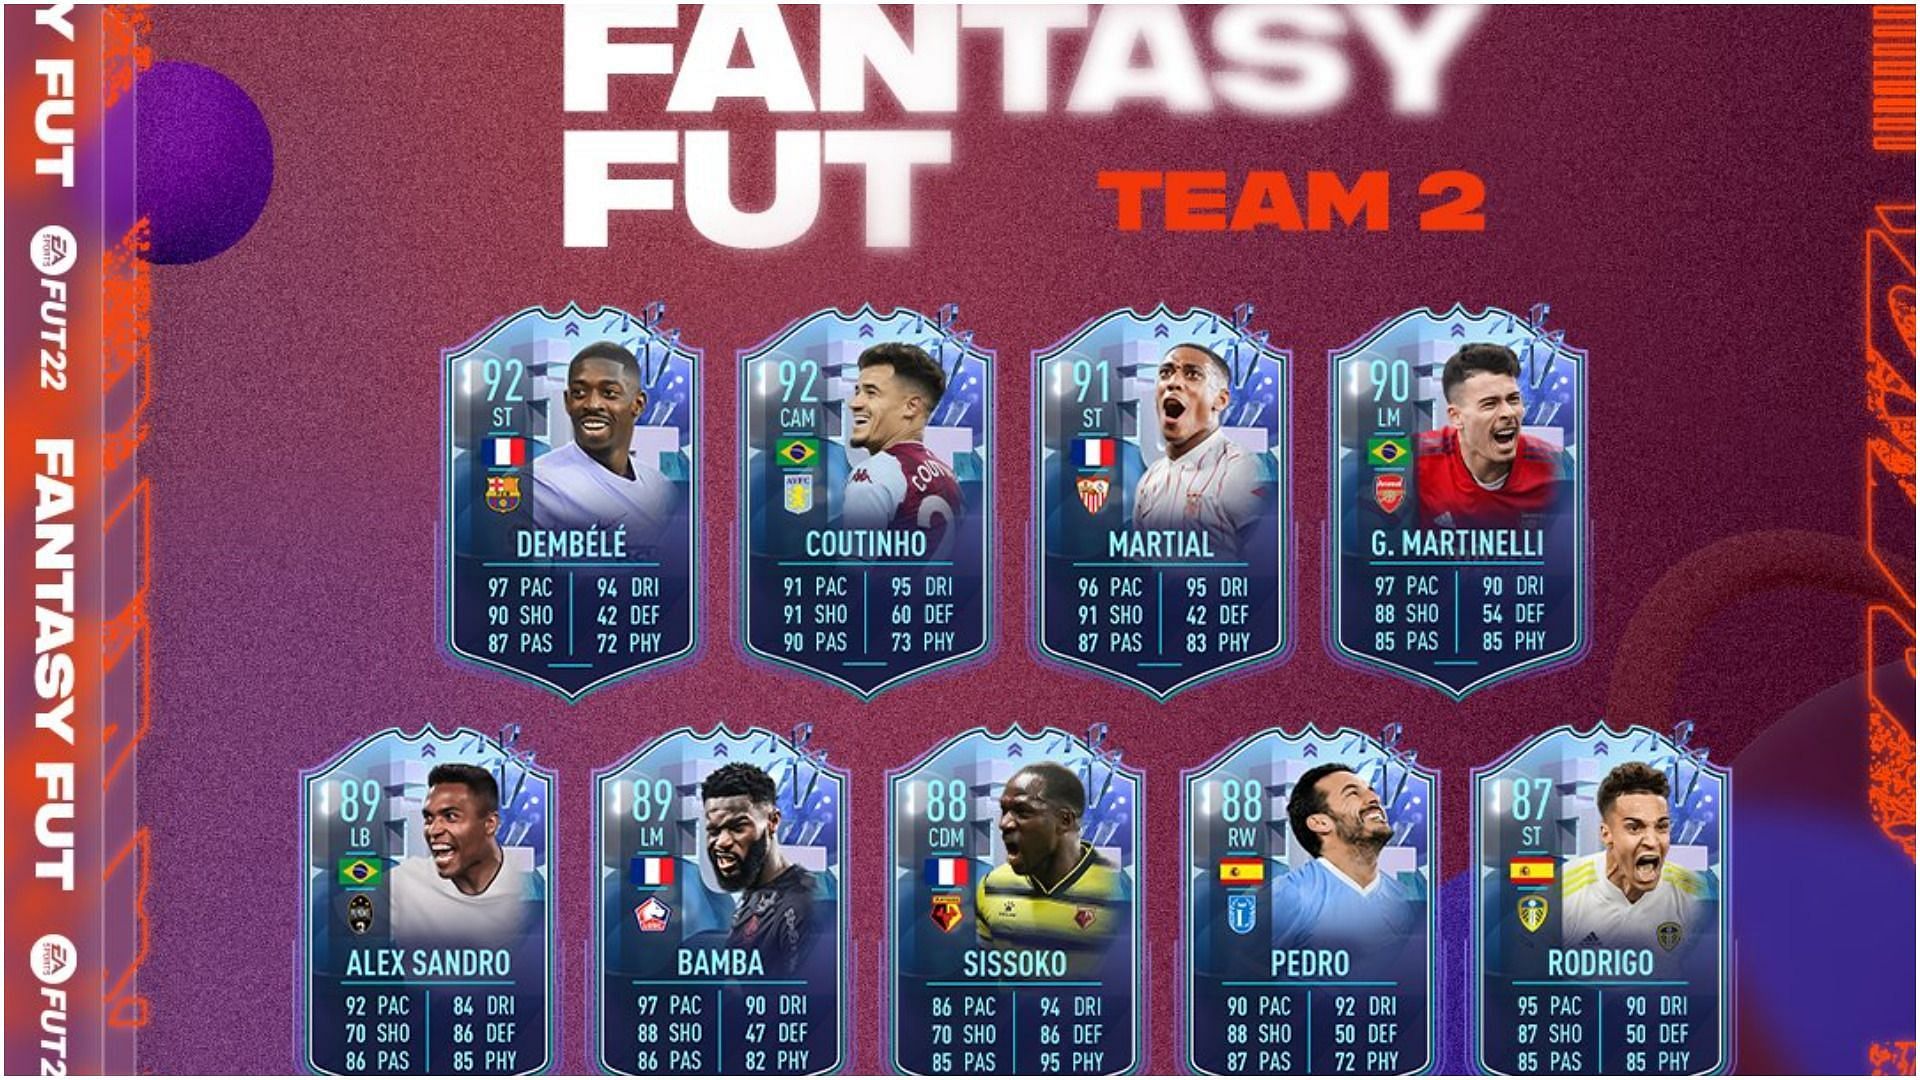 Team 2 of Fantasy FUT has been revealed (Image via EA Sports)